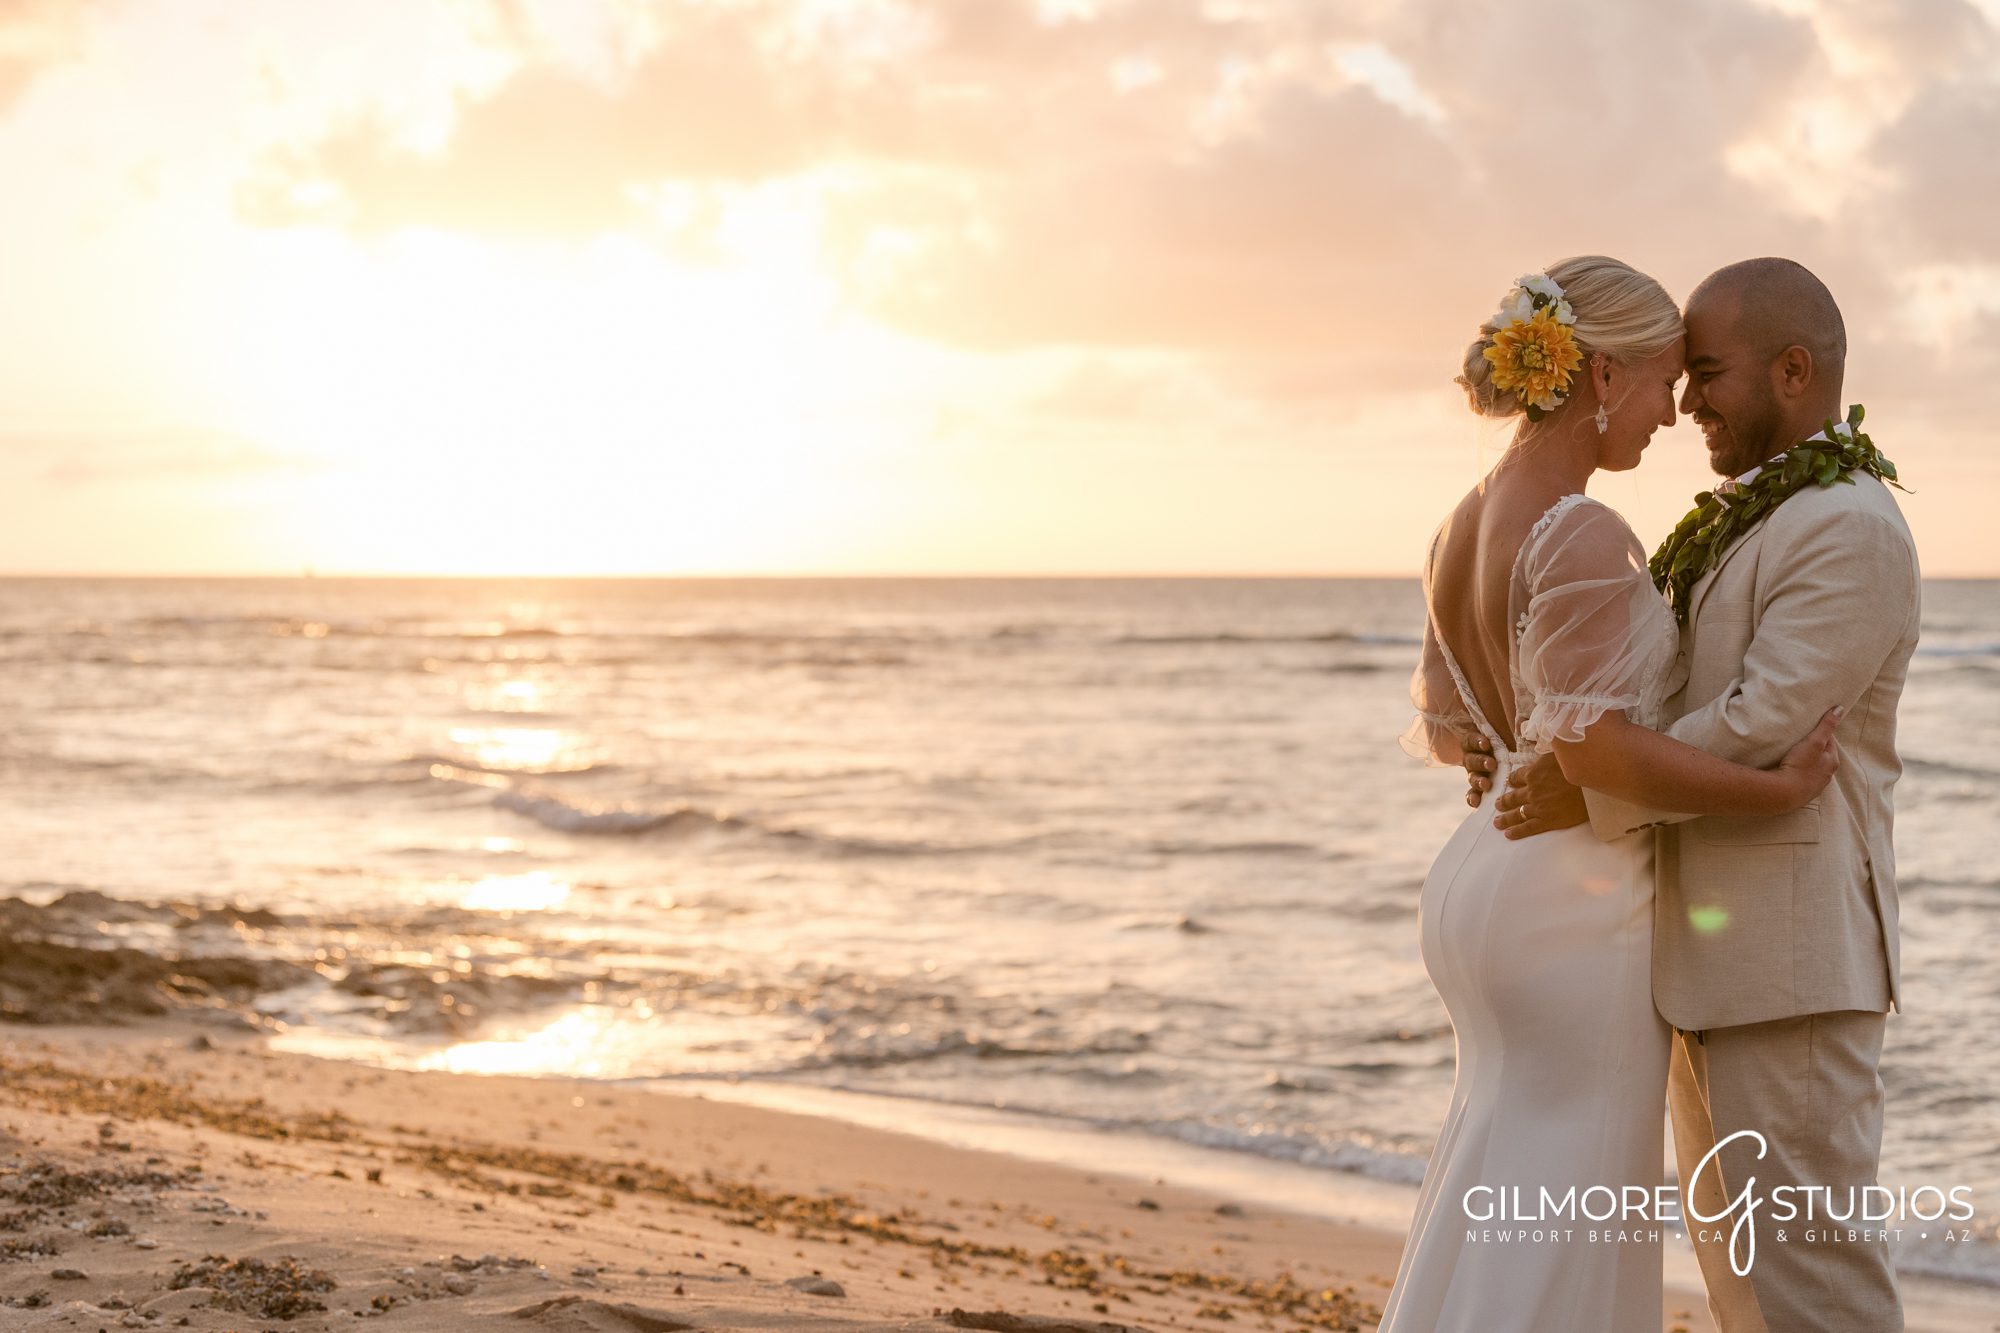 Loulu Palm Wedding Photography, Oahu Weddings - North Shore - Hawaii - Hawaiian Wedding Venue - Beach Wedding - Aloha Wedding - Gilmore Studios - wedding day - wedding dress - gown - Hawaiian sunset - sky - skies - clouds - sun - bride and groom - beach weddings - surf - sand - ocean